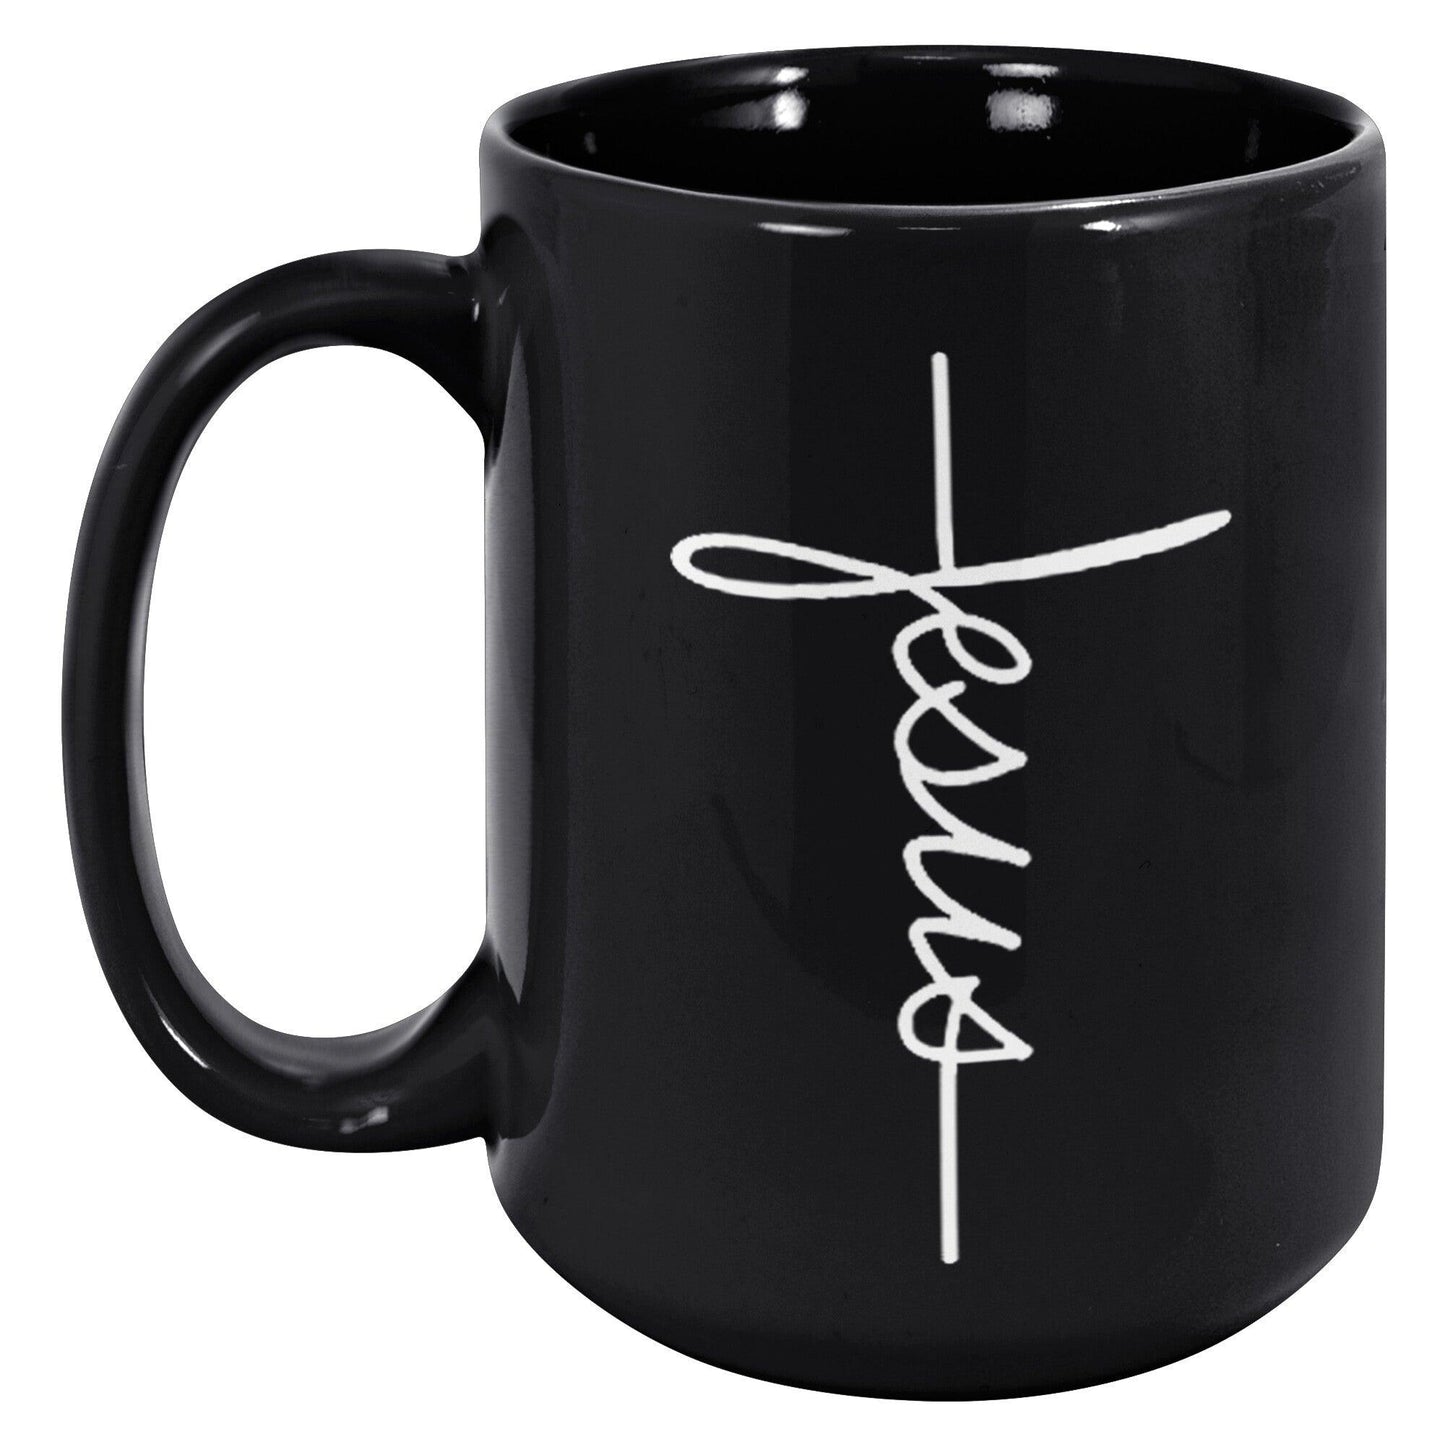 Jesus Cross Sign Black Mug - TheGivenGet